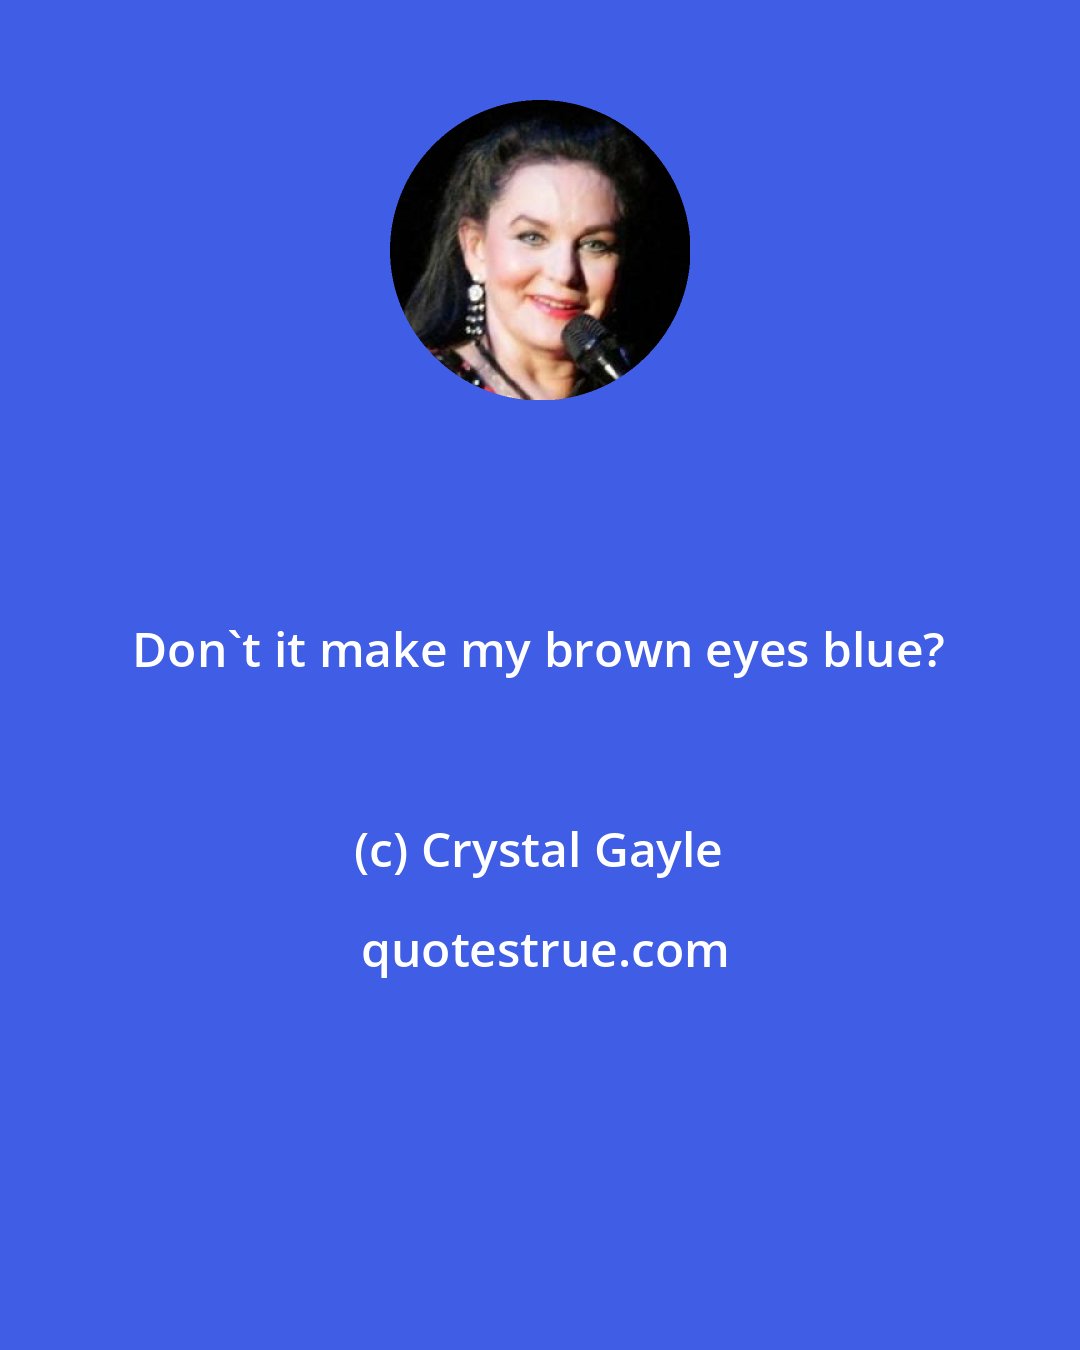 Crystal Gayle: Don't it make my brown eyes blue?